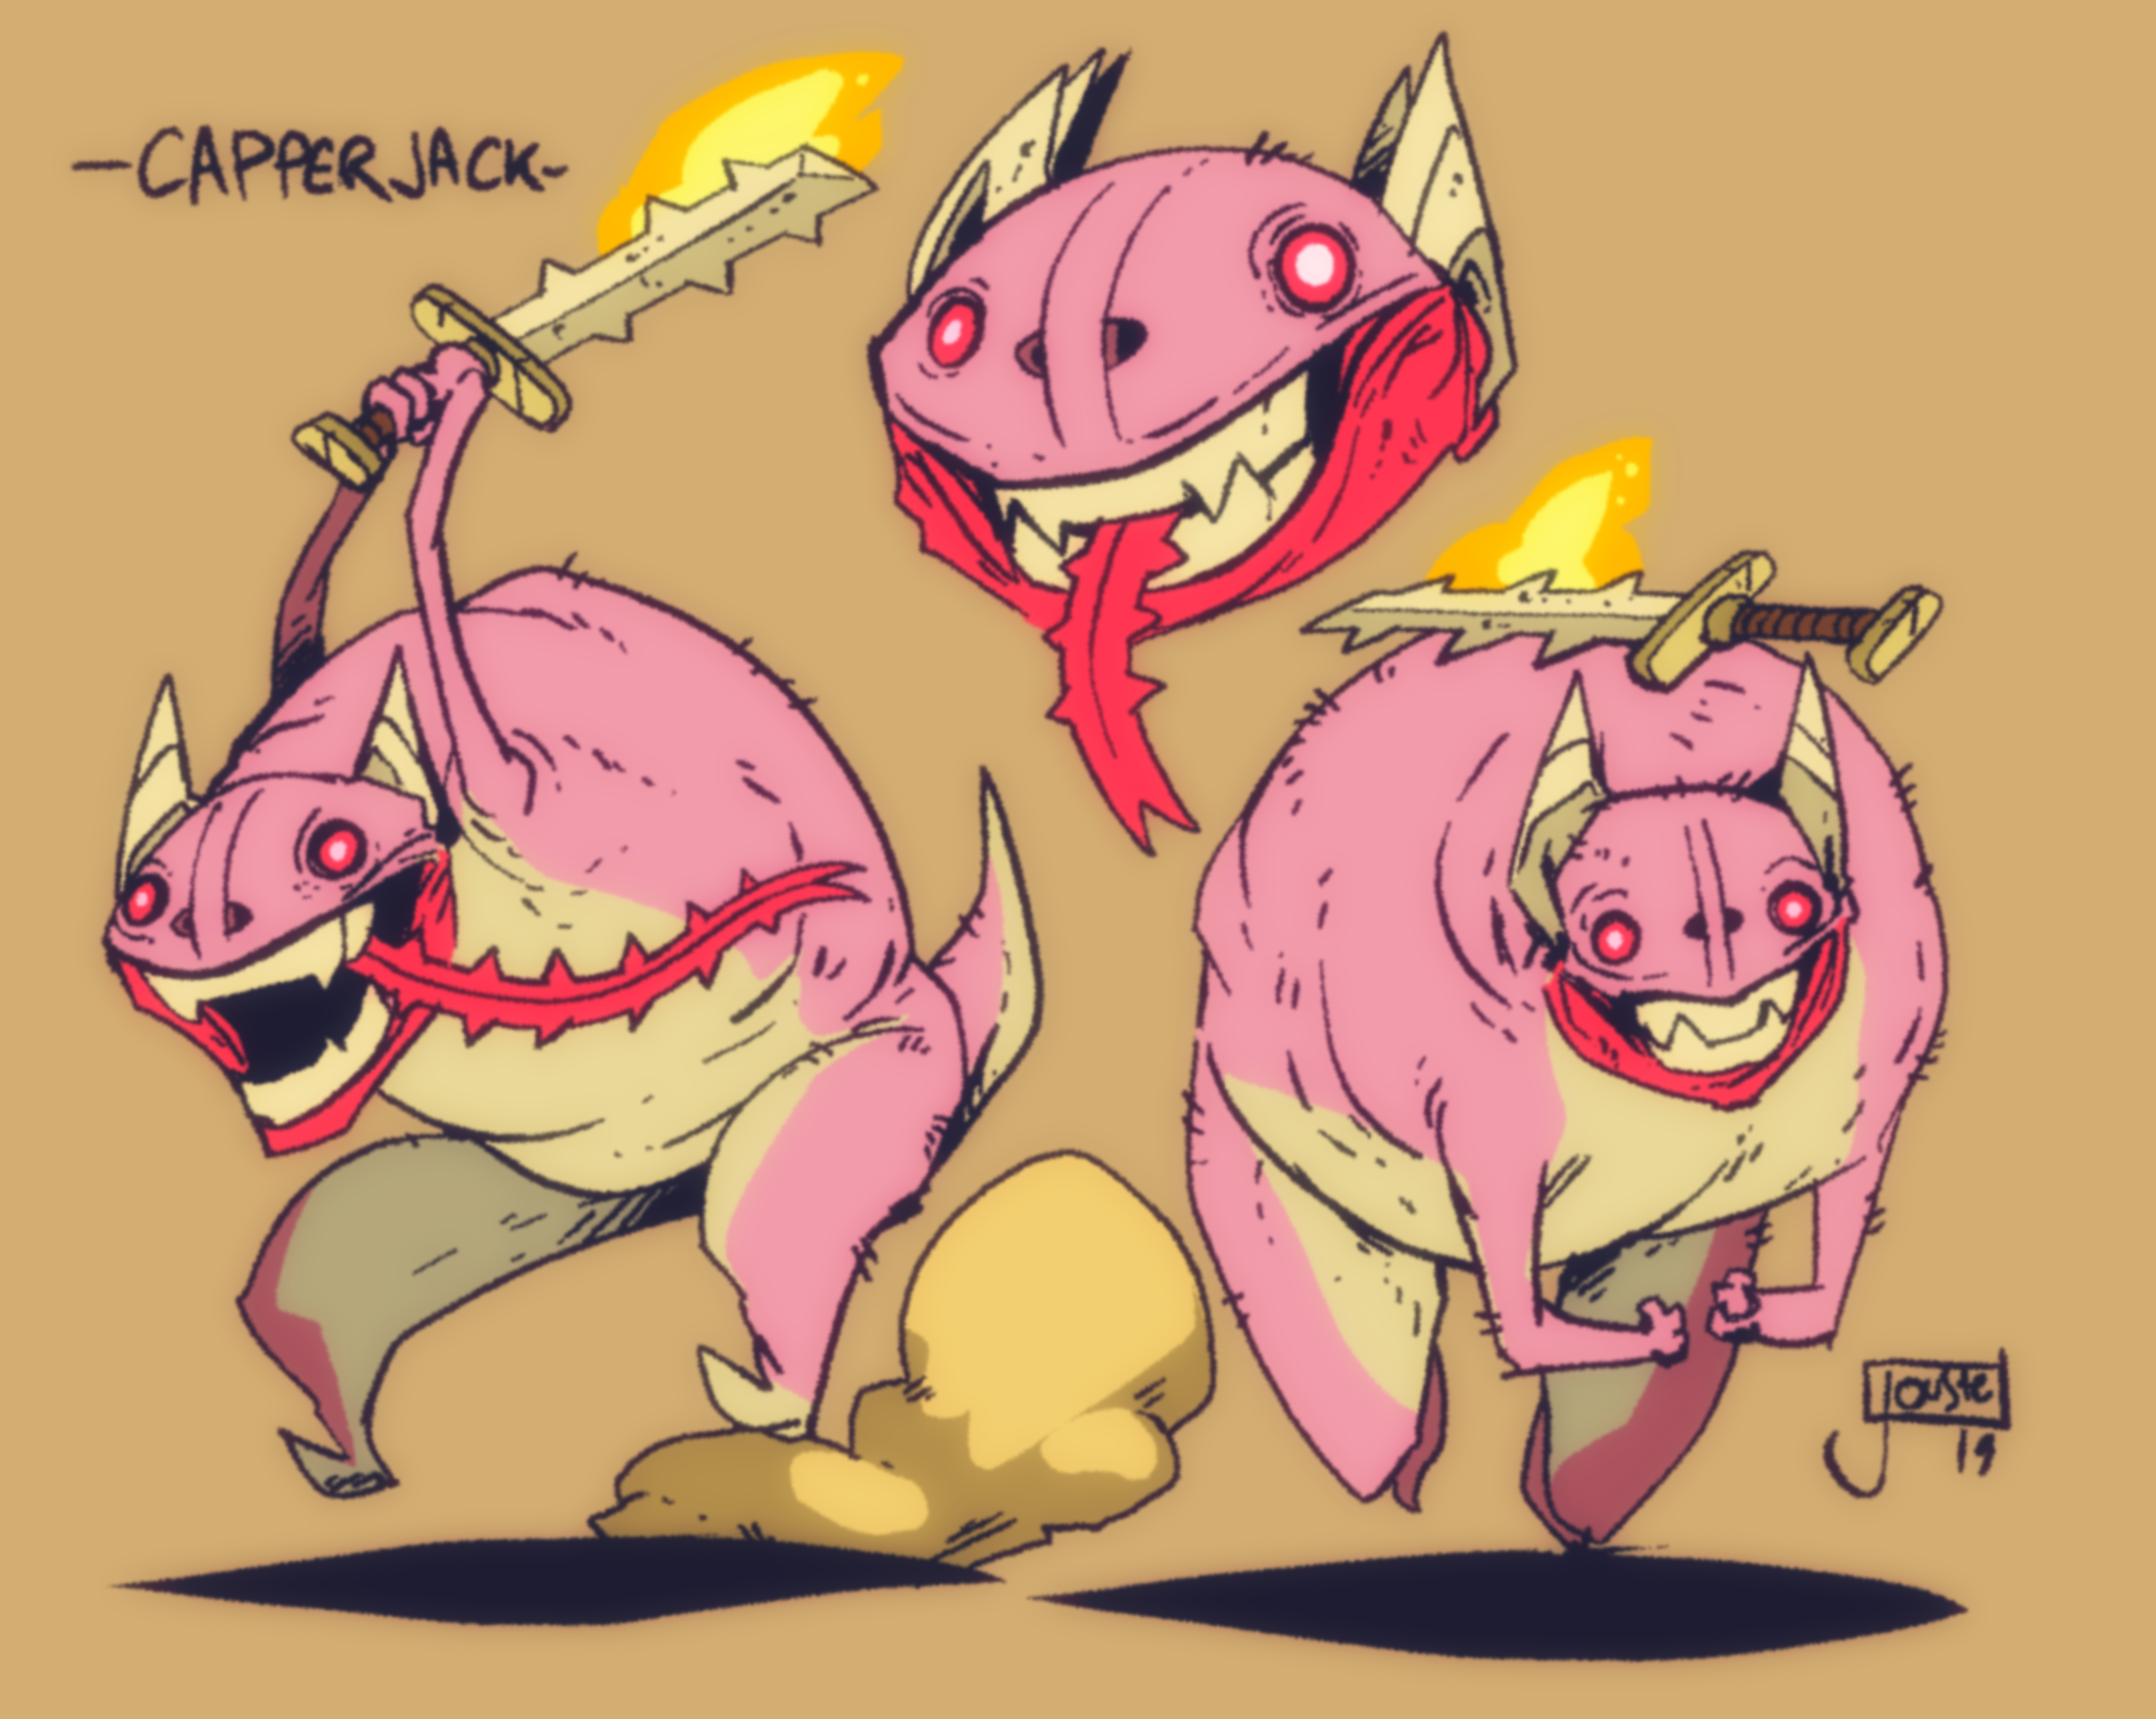 Capperjack the Sworded Demon